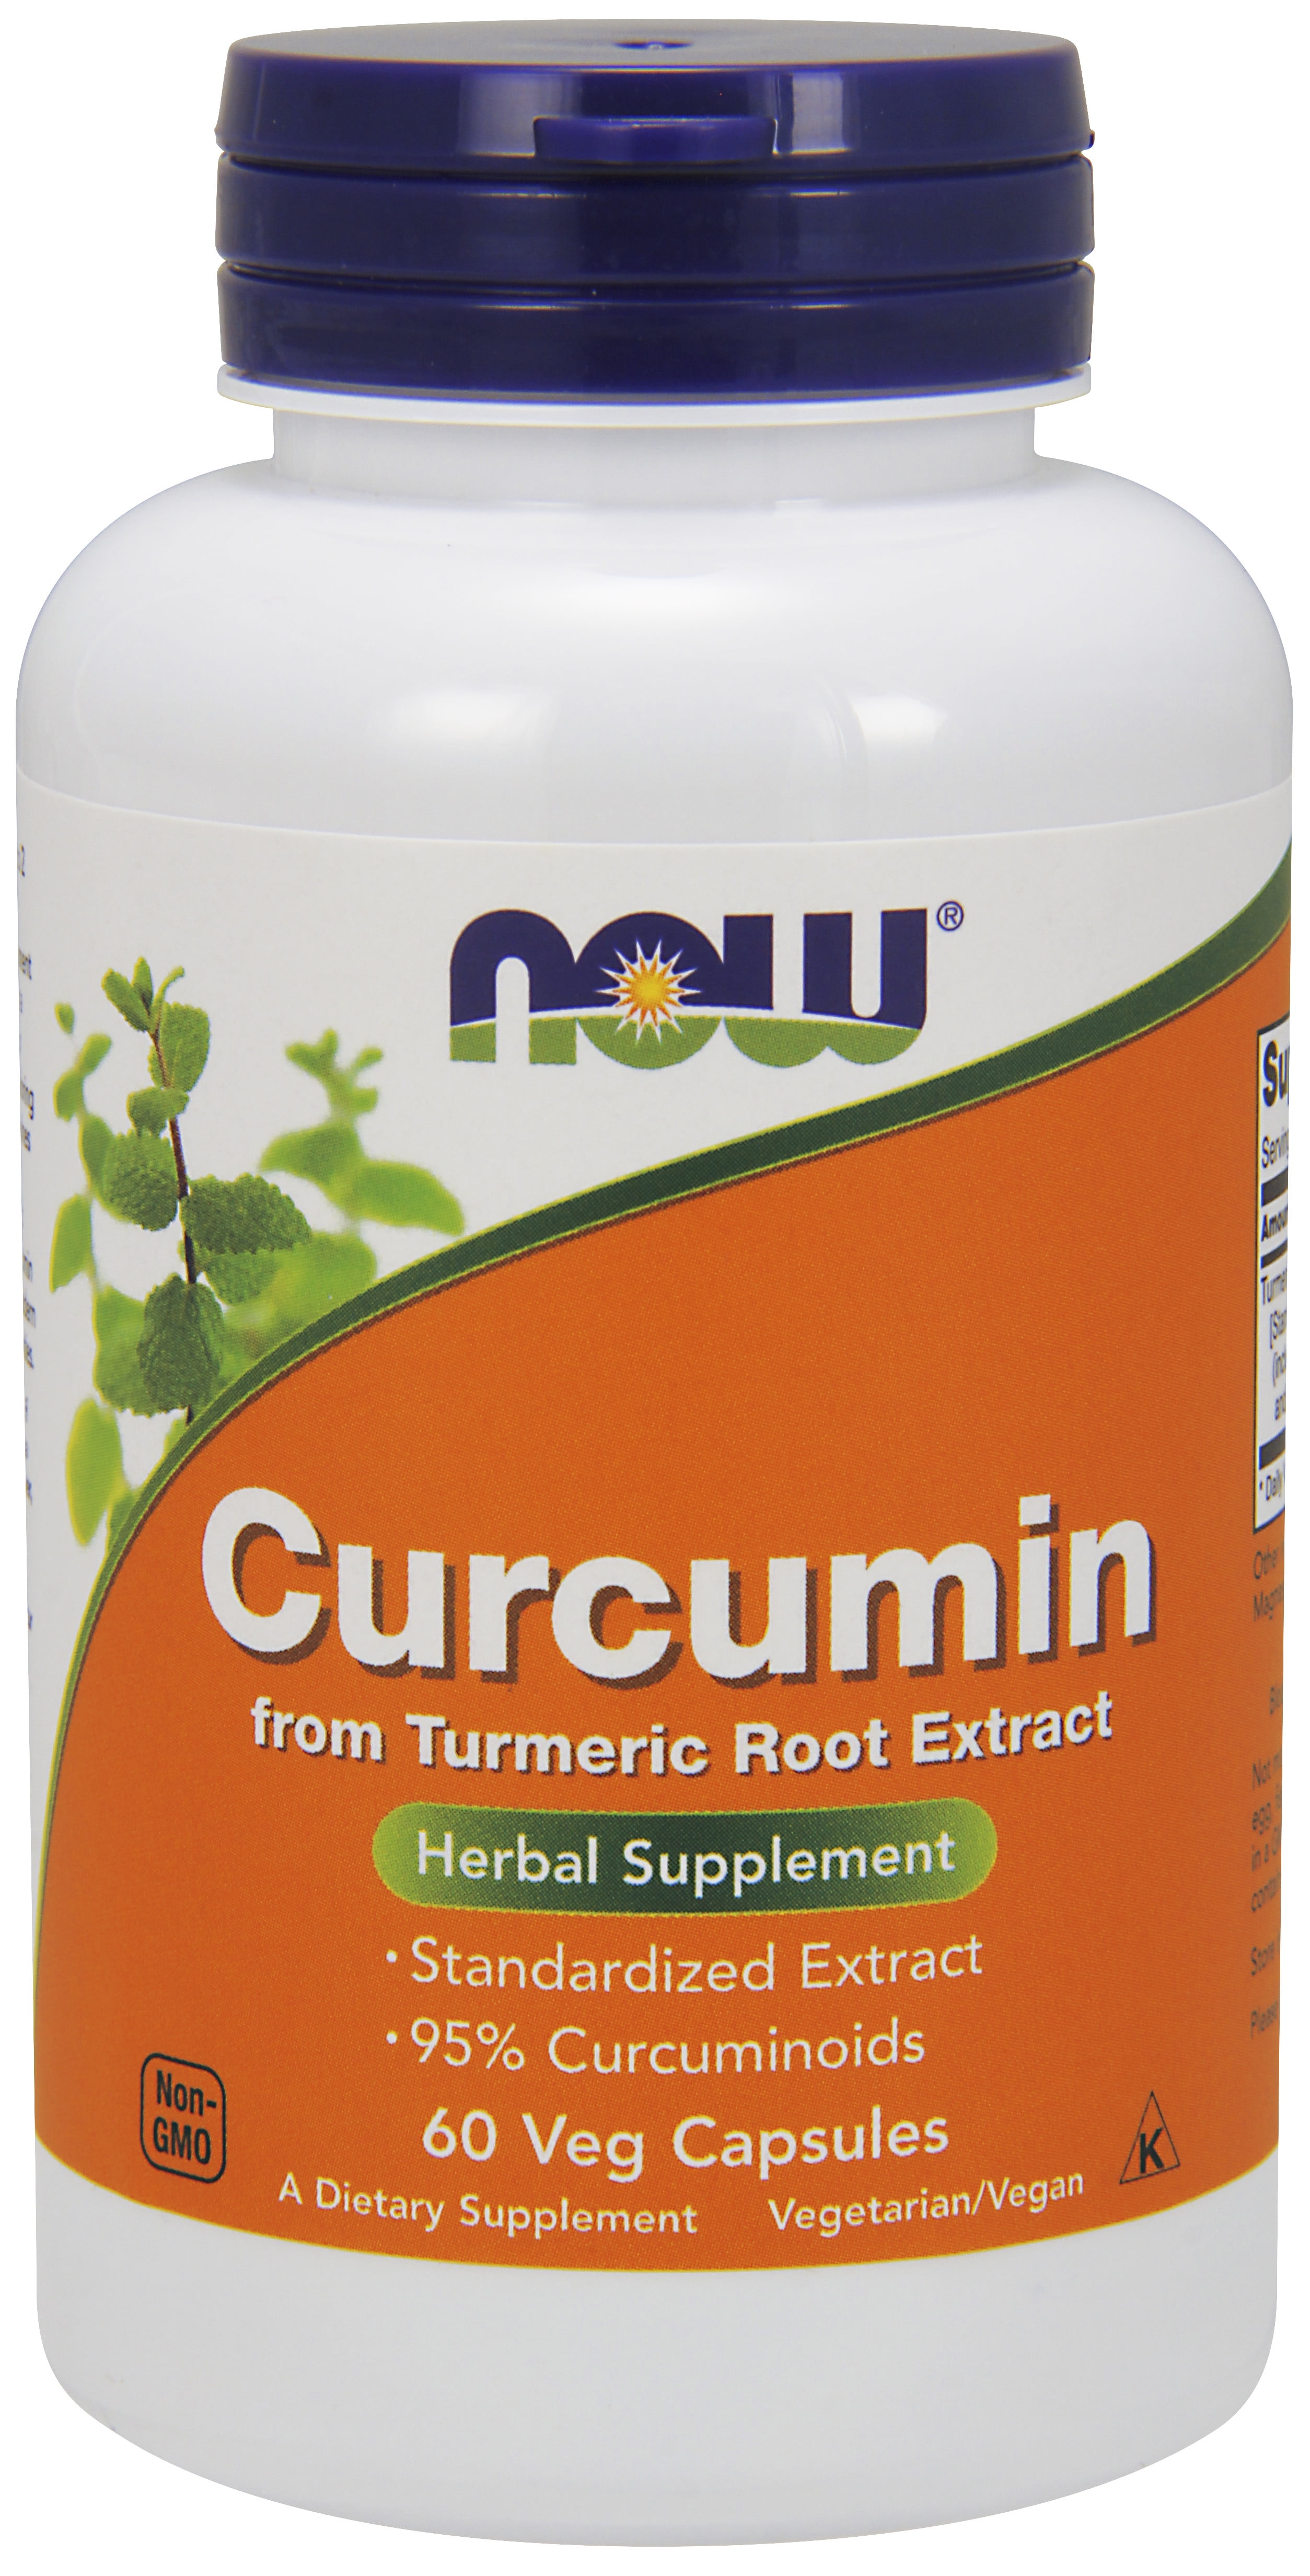 curcumin supplement